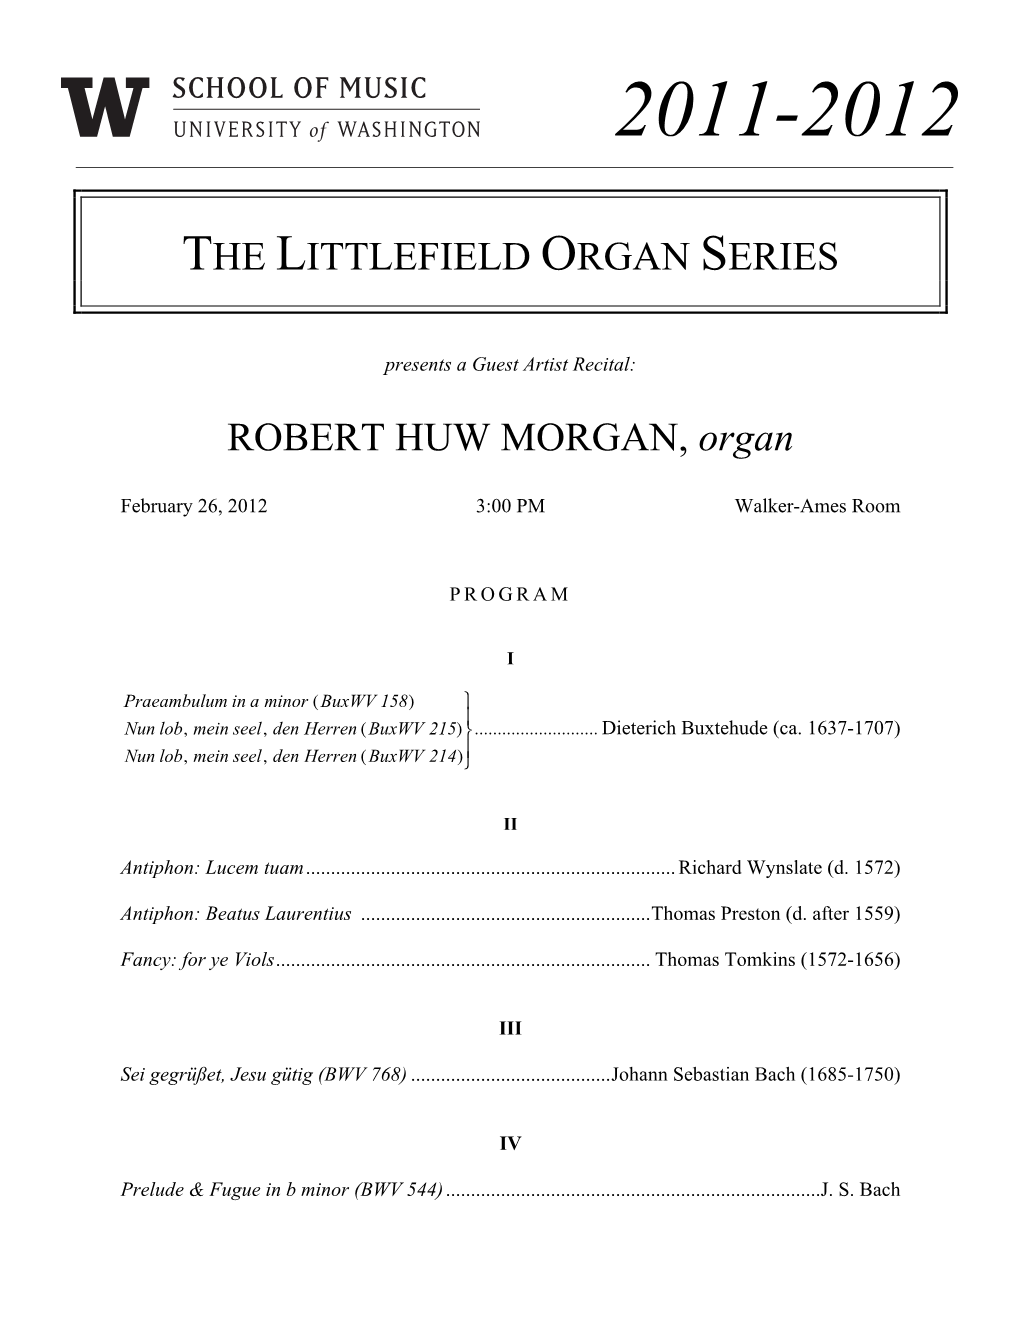 THE LITTLEFIELD ORGAN SERIES ROBERT HUW MORGAN, Organ